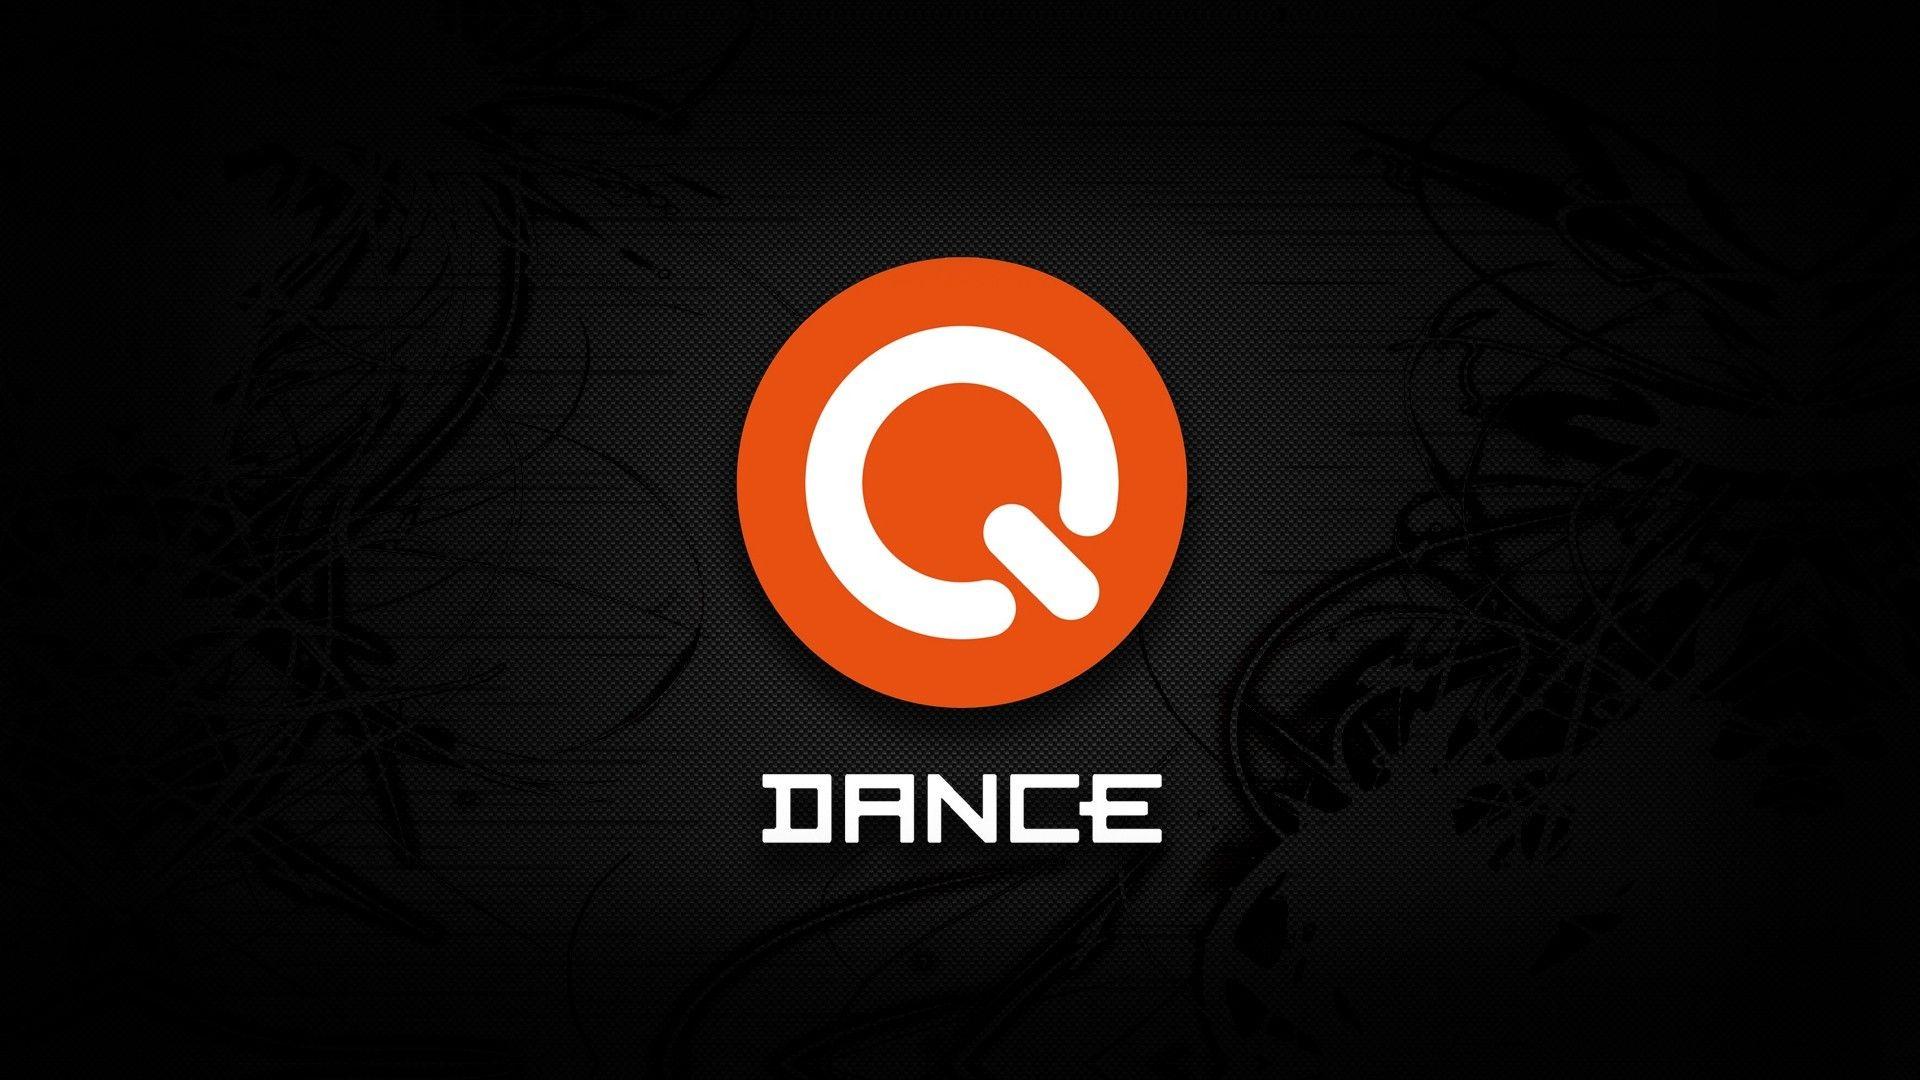 Q Dance Wallpaper. PC